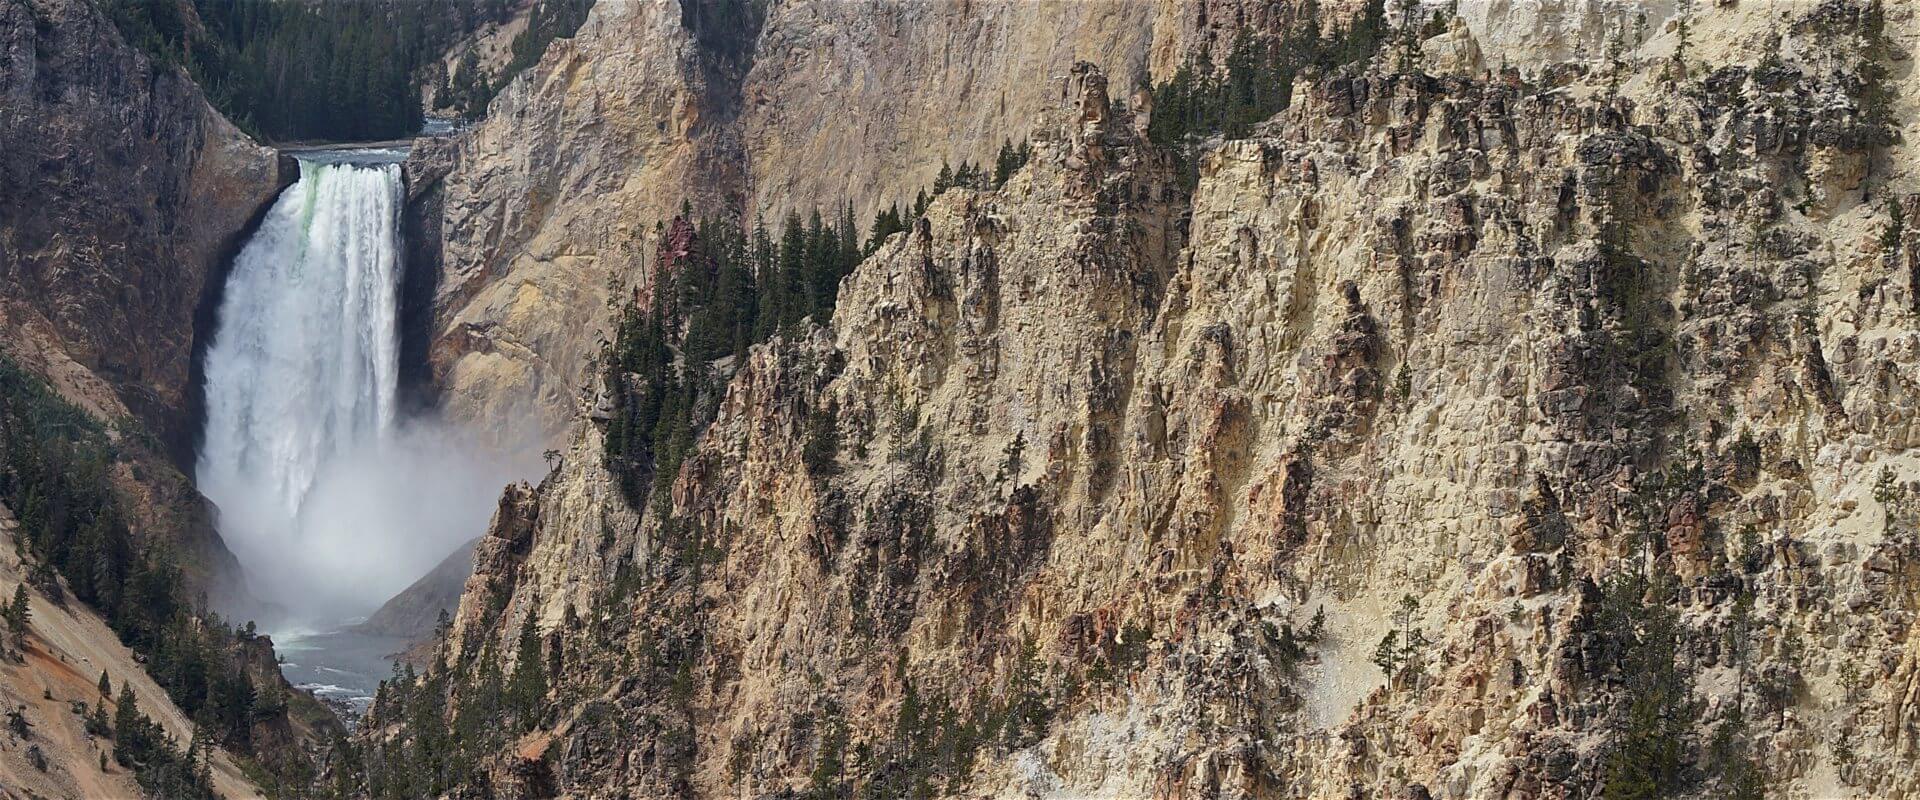 Grand Canyon of the Yellowstone: Steile Felswände und tosendes Wasser